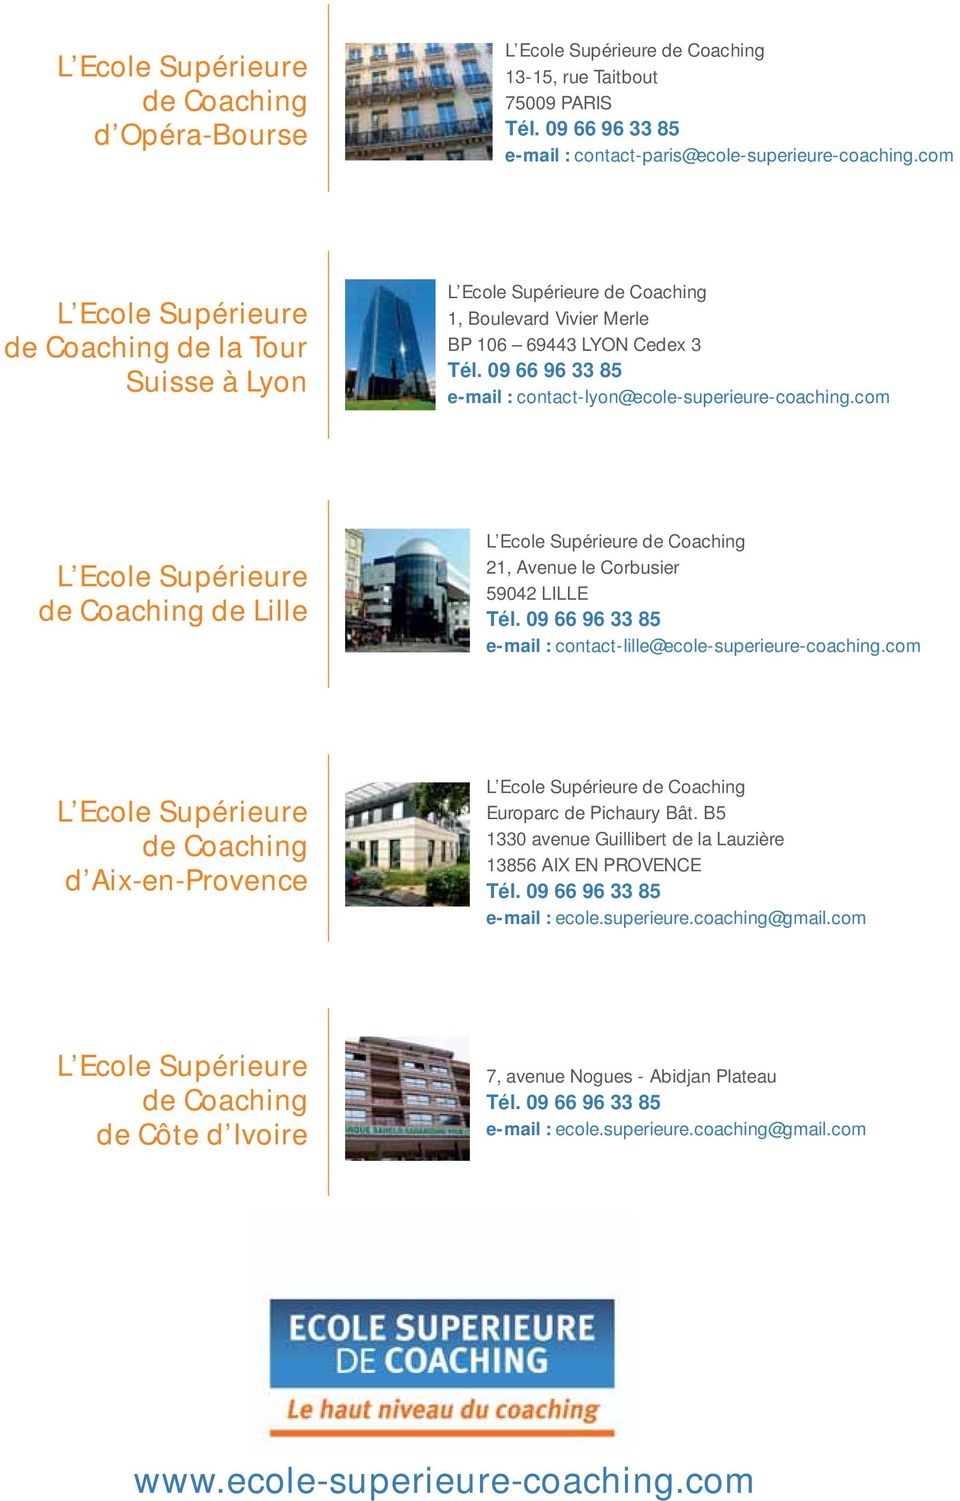 09 66 96 33 85 e-mail : contact-lyon@ecole-superieure-coaching.com L Ecole Supérieure de Coaching de Lille L Ecole Supérieure de Coaching 21, Avenue le Corbusier 59042 LILLE Tél.